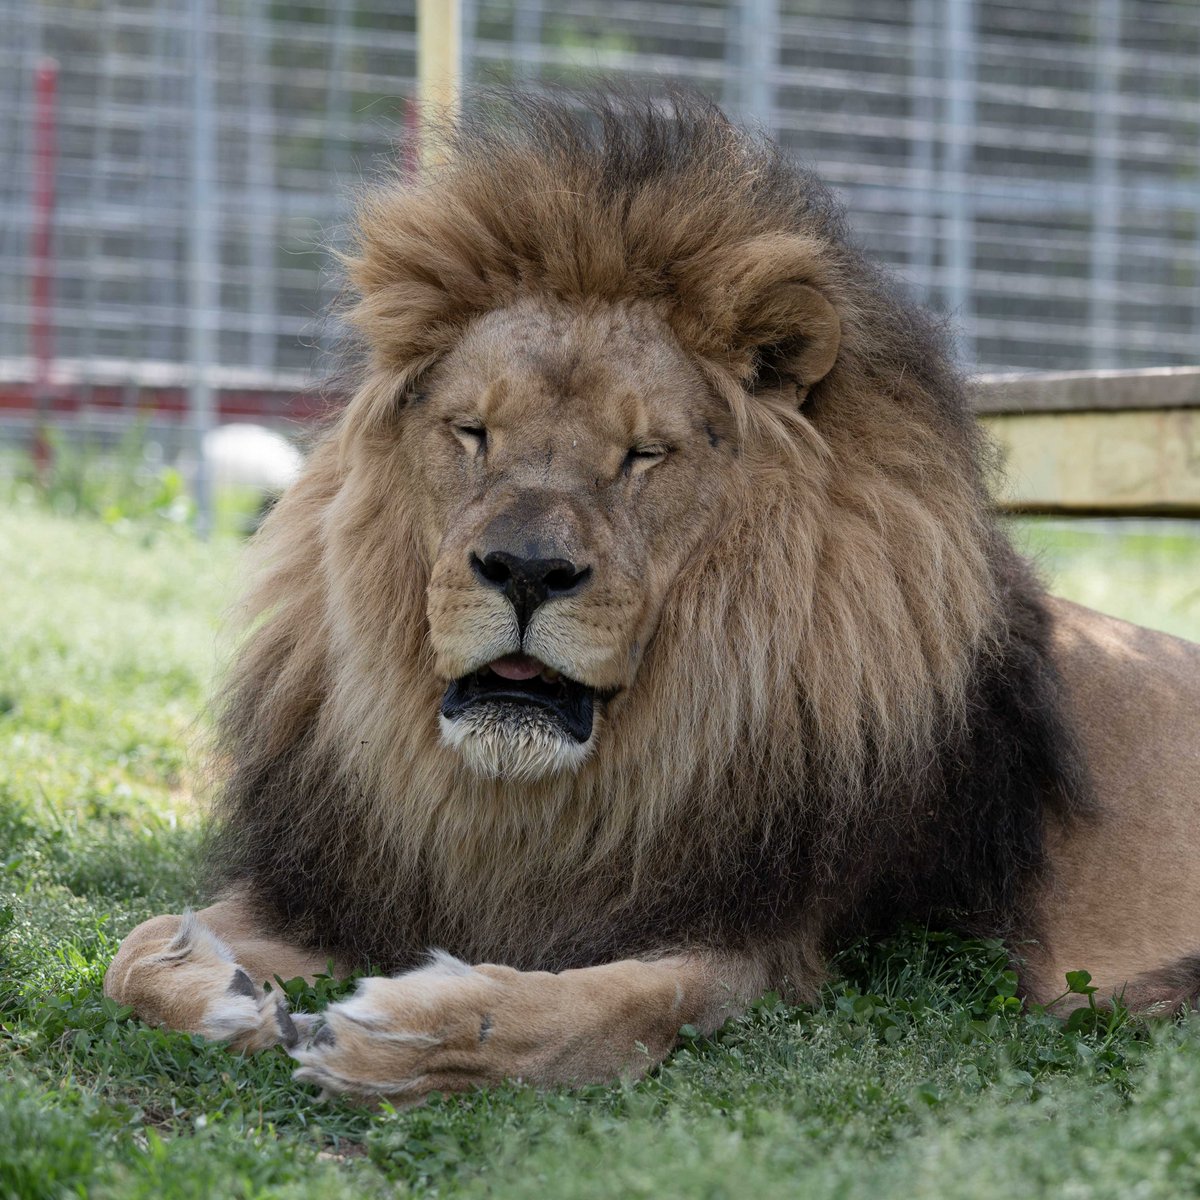 Simba Lion, 'I am not sleepy, I'm not sleeping...   SNORE......'
Hoping everyone had a roaring wonderful Saturday.

#lions #lion #TCWR #TurpentineCreek #GFAS #GlobalFederationAnimalSanctuaries #RescueToRefuge #FundFreedom #Sanctuary #BigCat #Cats #sleepycat